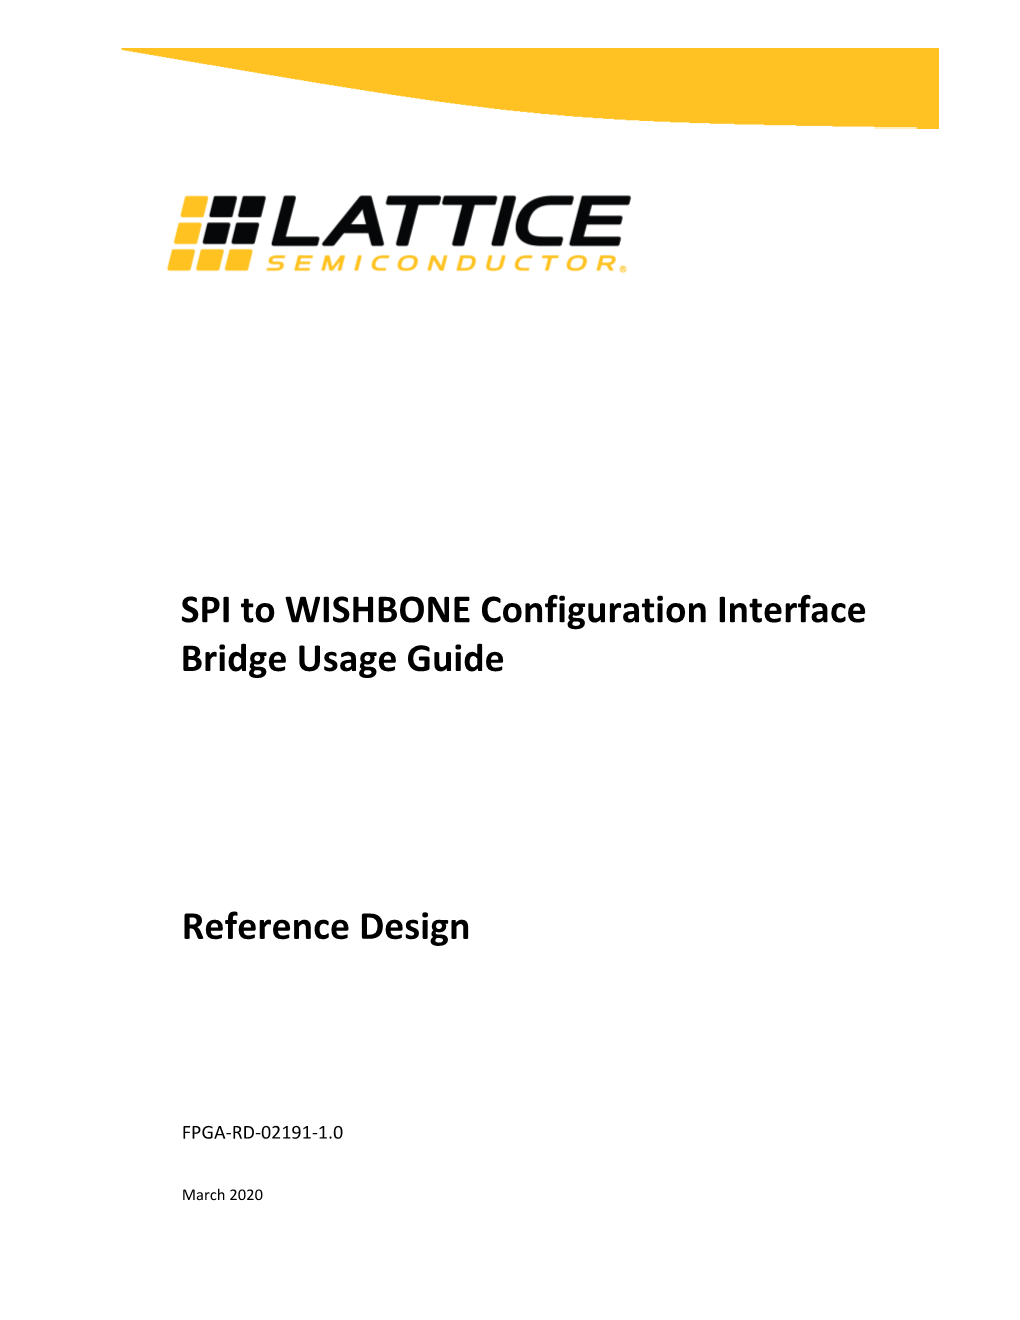 SPI to WISHBONE Configuration Interface Bridge Usage Guide